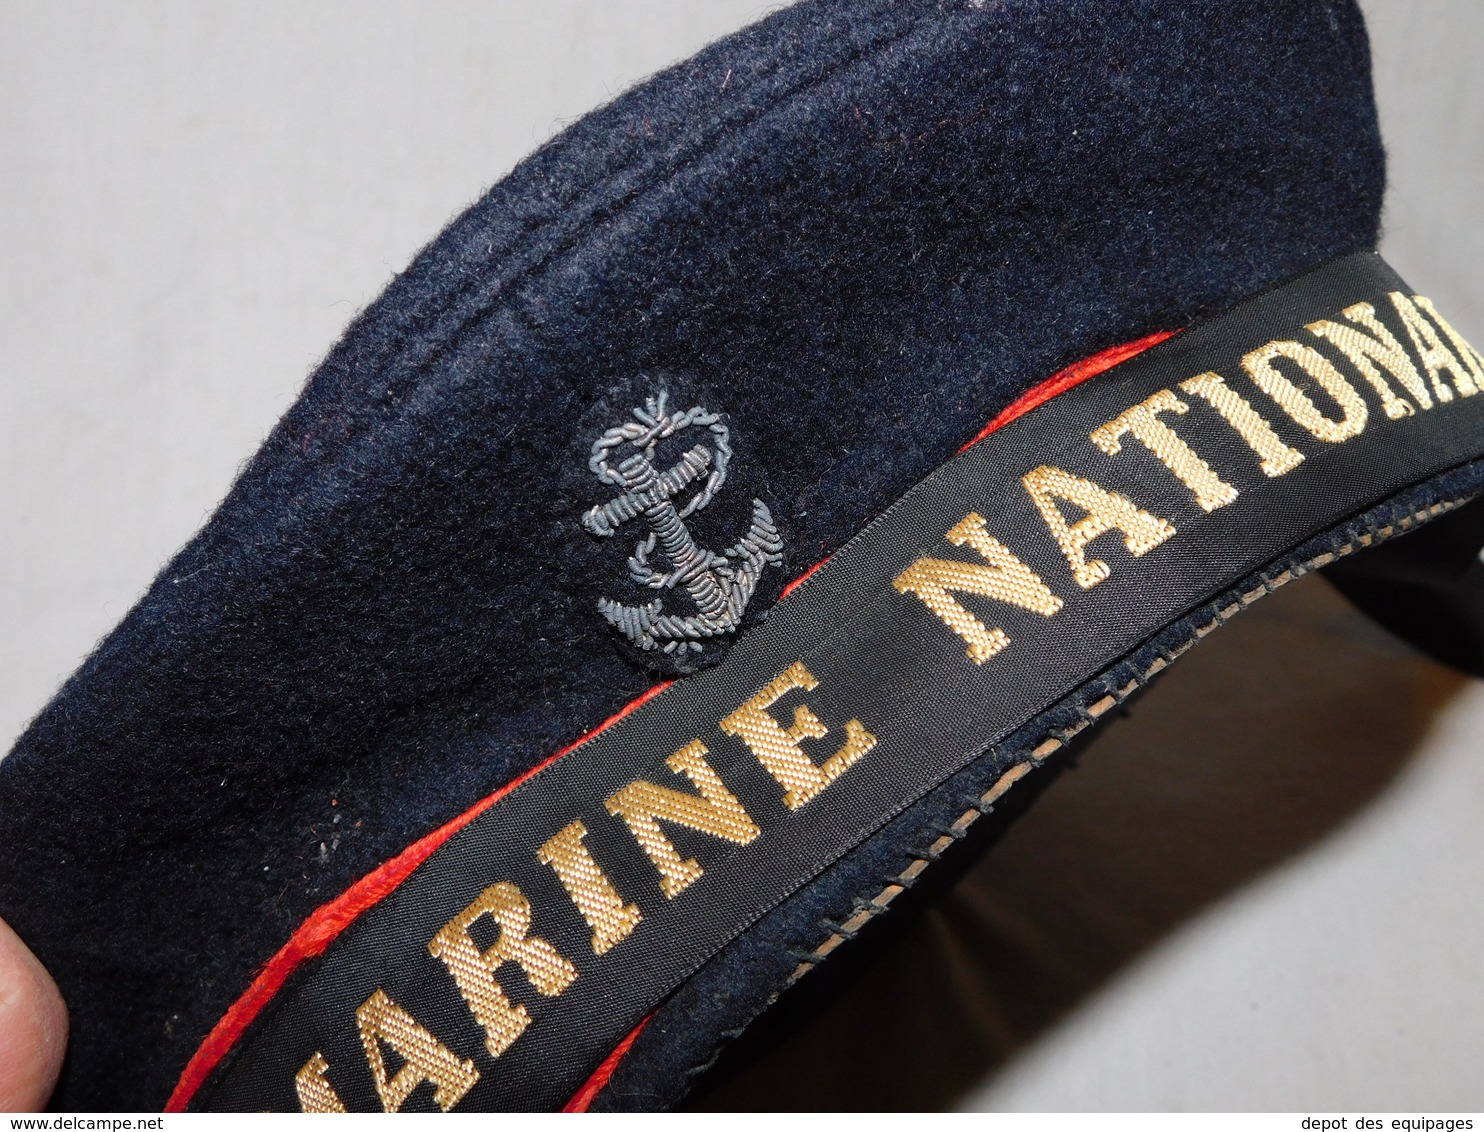 RARE BACHI MARINE NATIONALE - TOULON 1956 - Headpieces, Headdresses